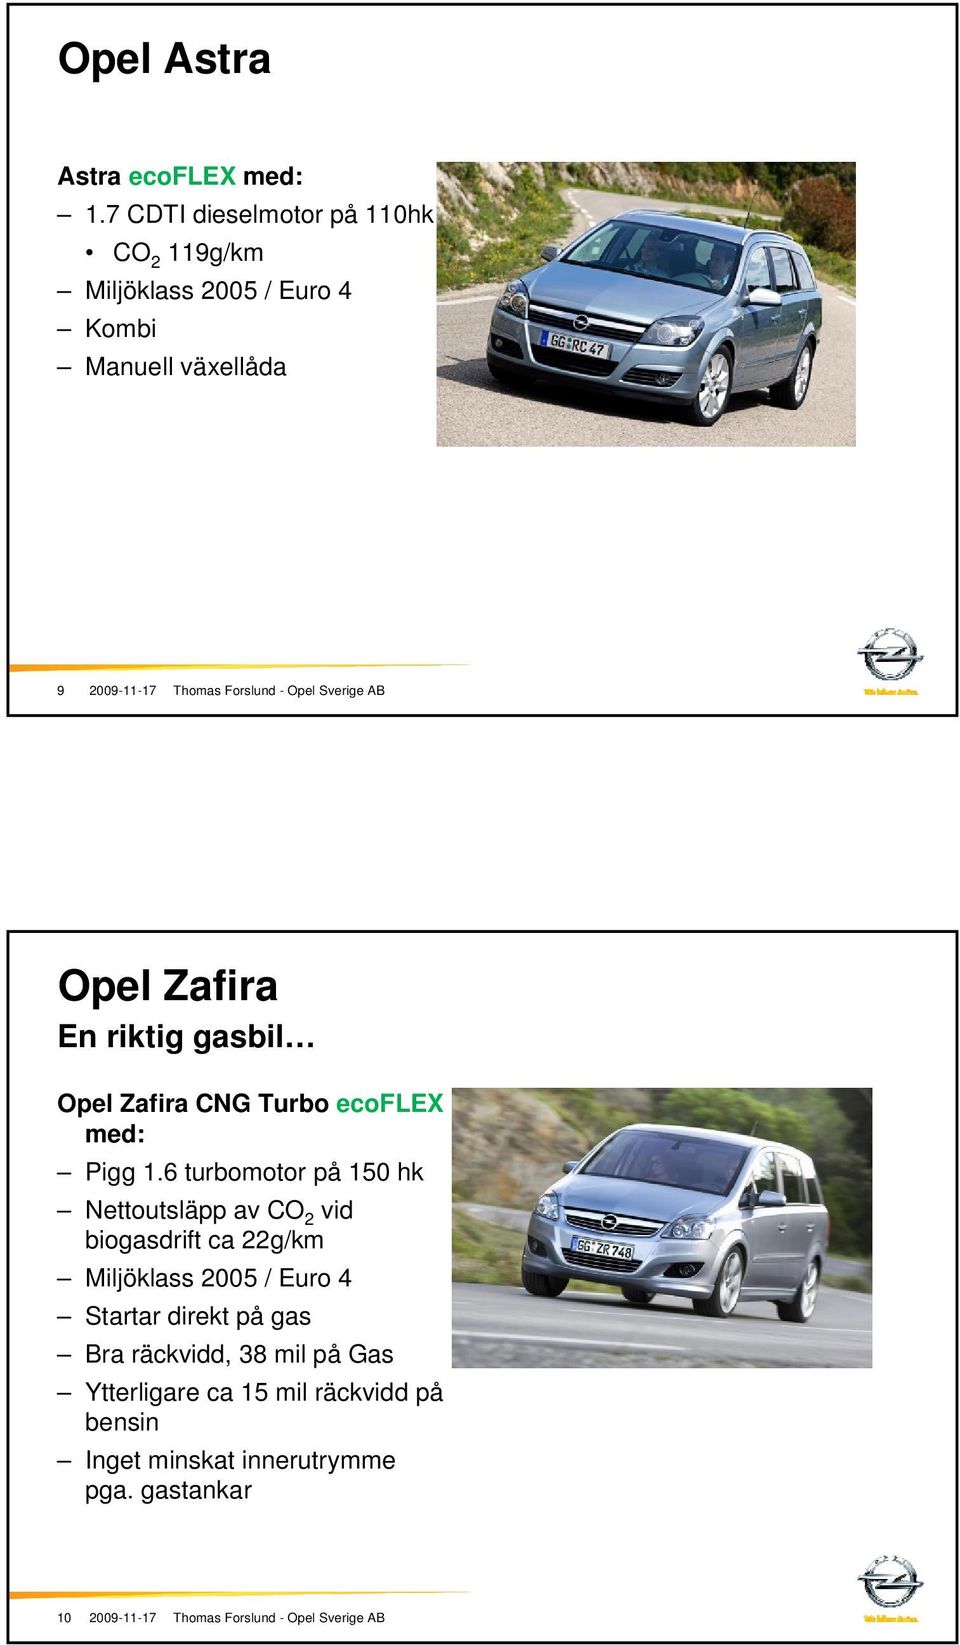 gasbil Opel Zafira CNG Turbo ecoflex med: Pigg 1.